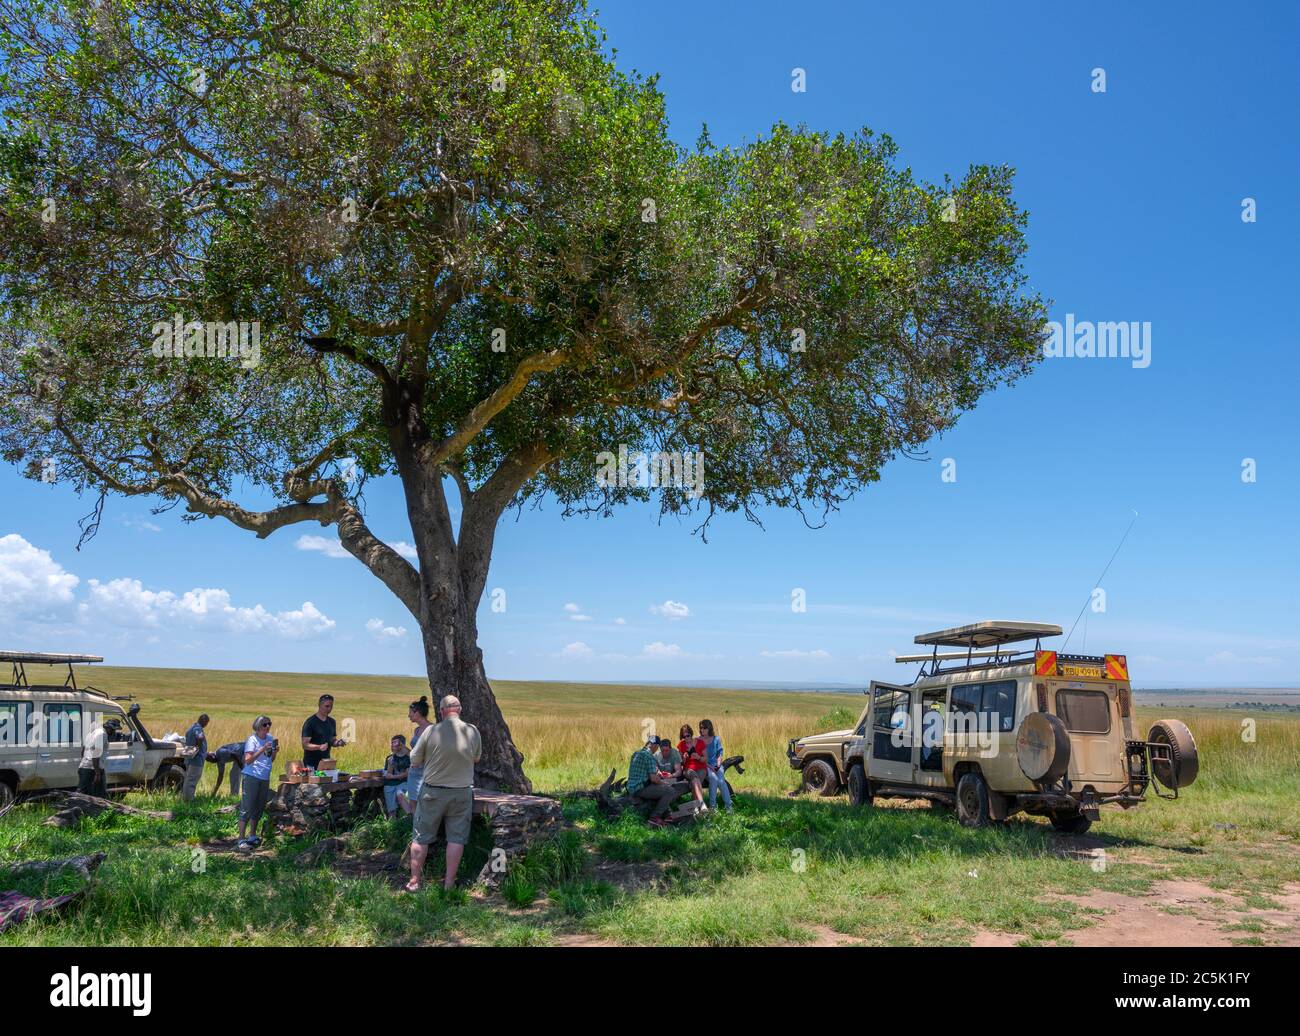 Safari véhicules sous un arbre avec des personnes ayant un pique-nique déjeuner, Mara Triangle, Masai Mara National Reserve, Kenya, Afrique Banque D'Images